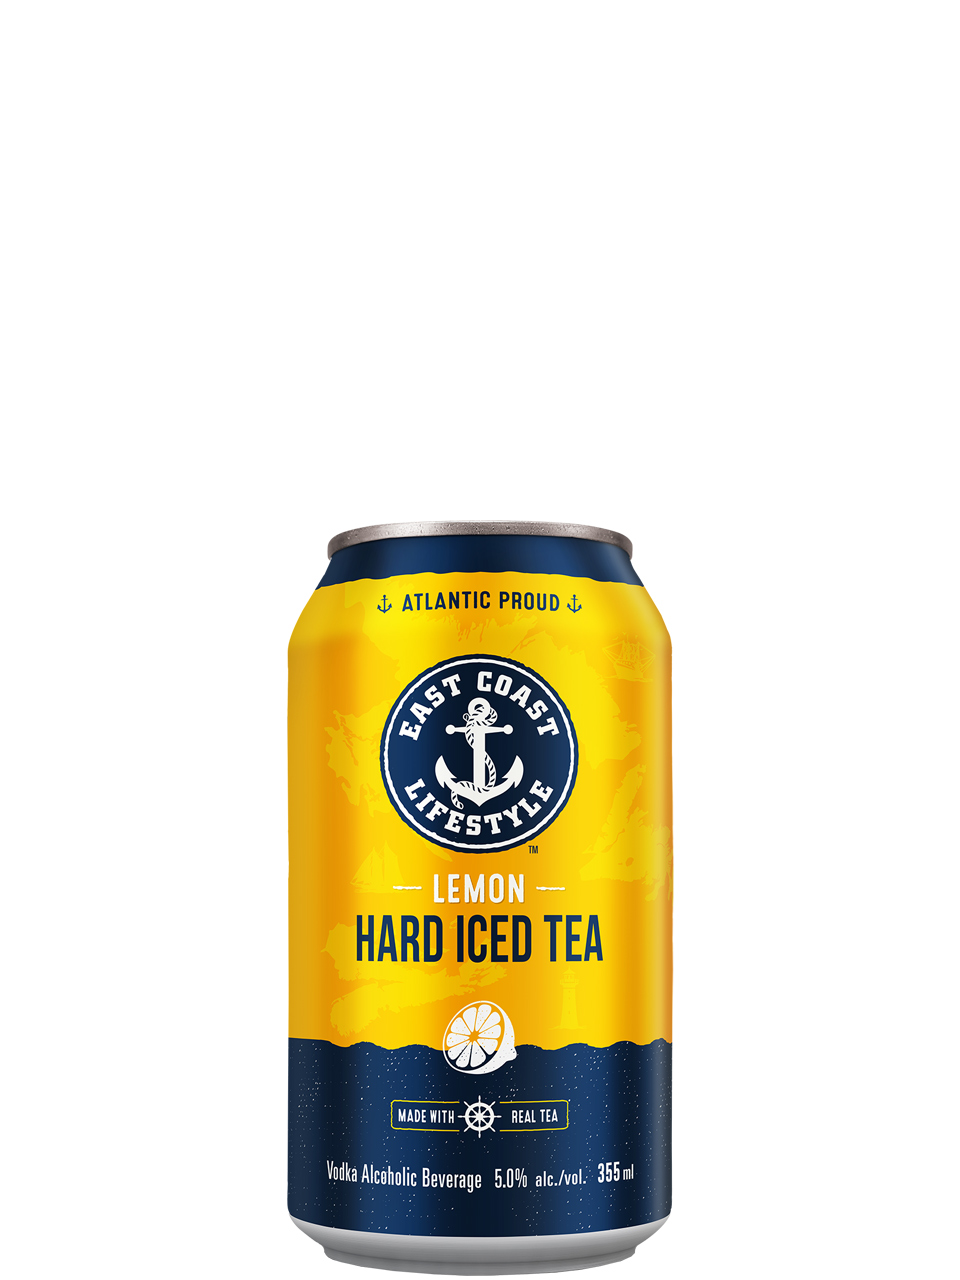 East Coast Lifestyle Lemon Hard Iced Tea 6pk Cans